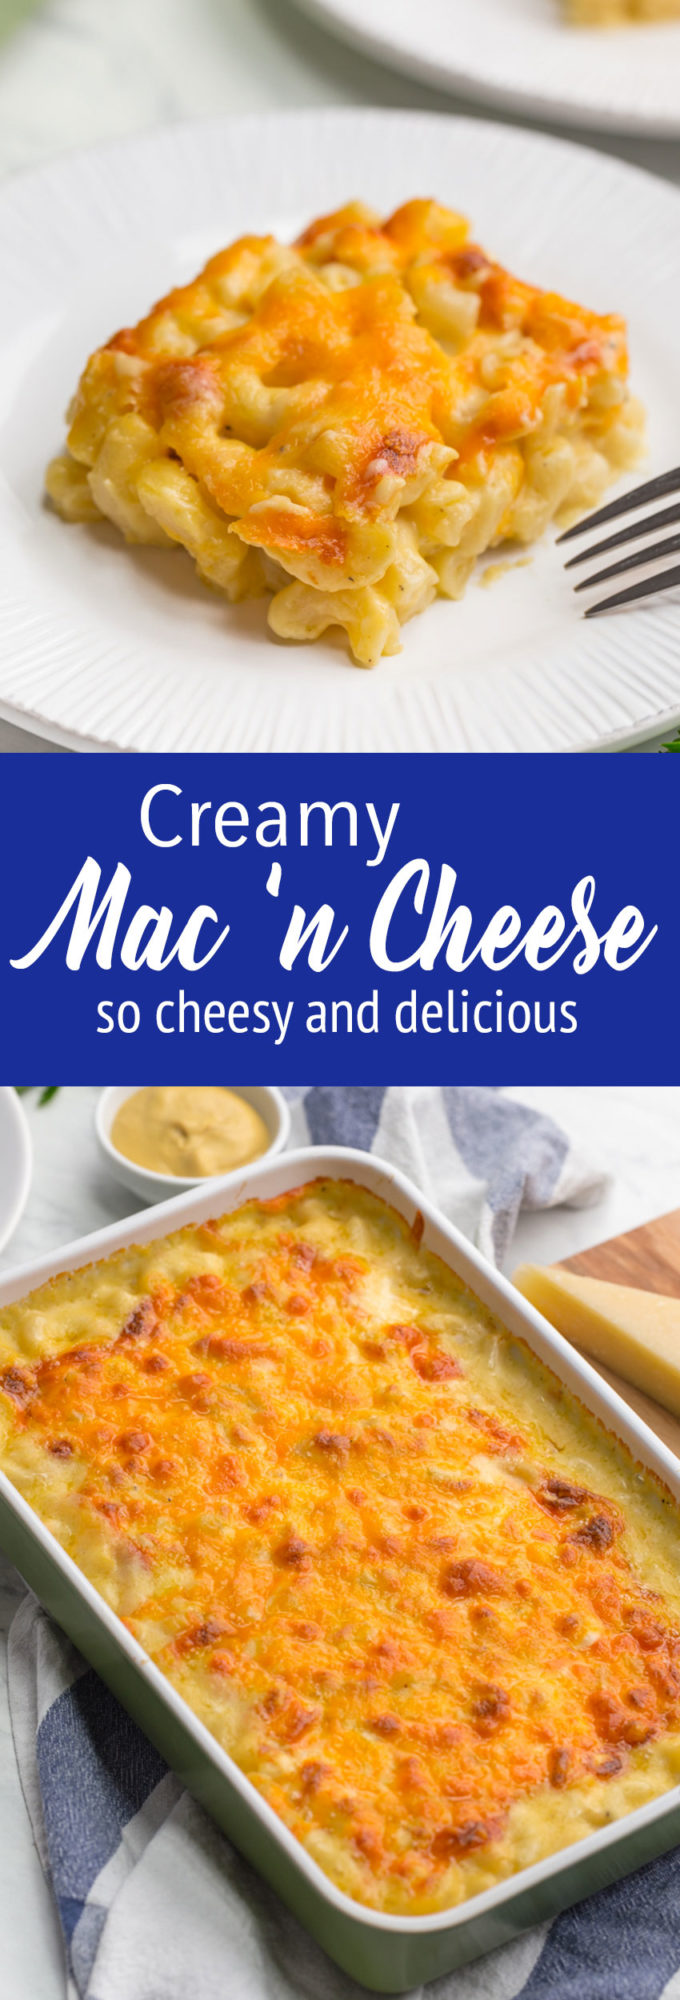 Creamy Mac and cheese casserole